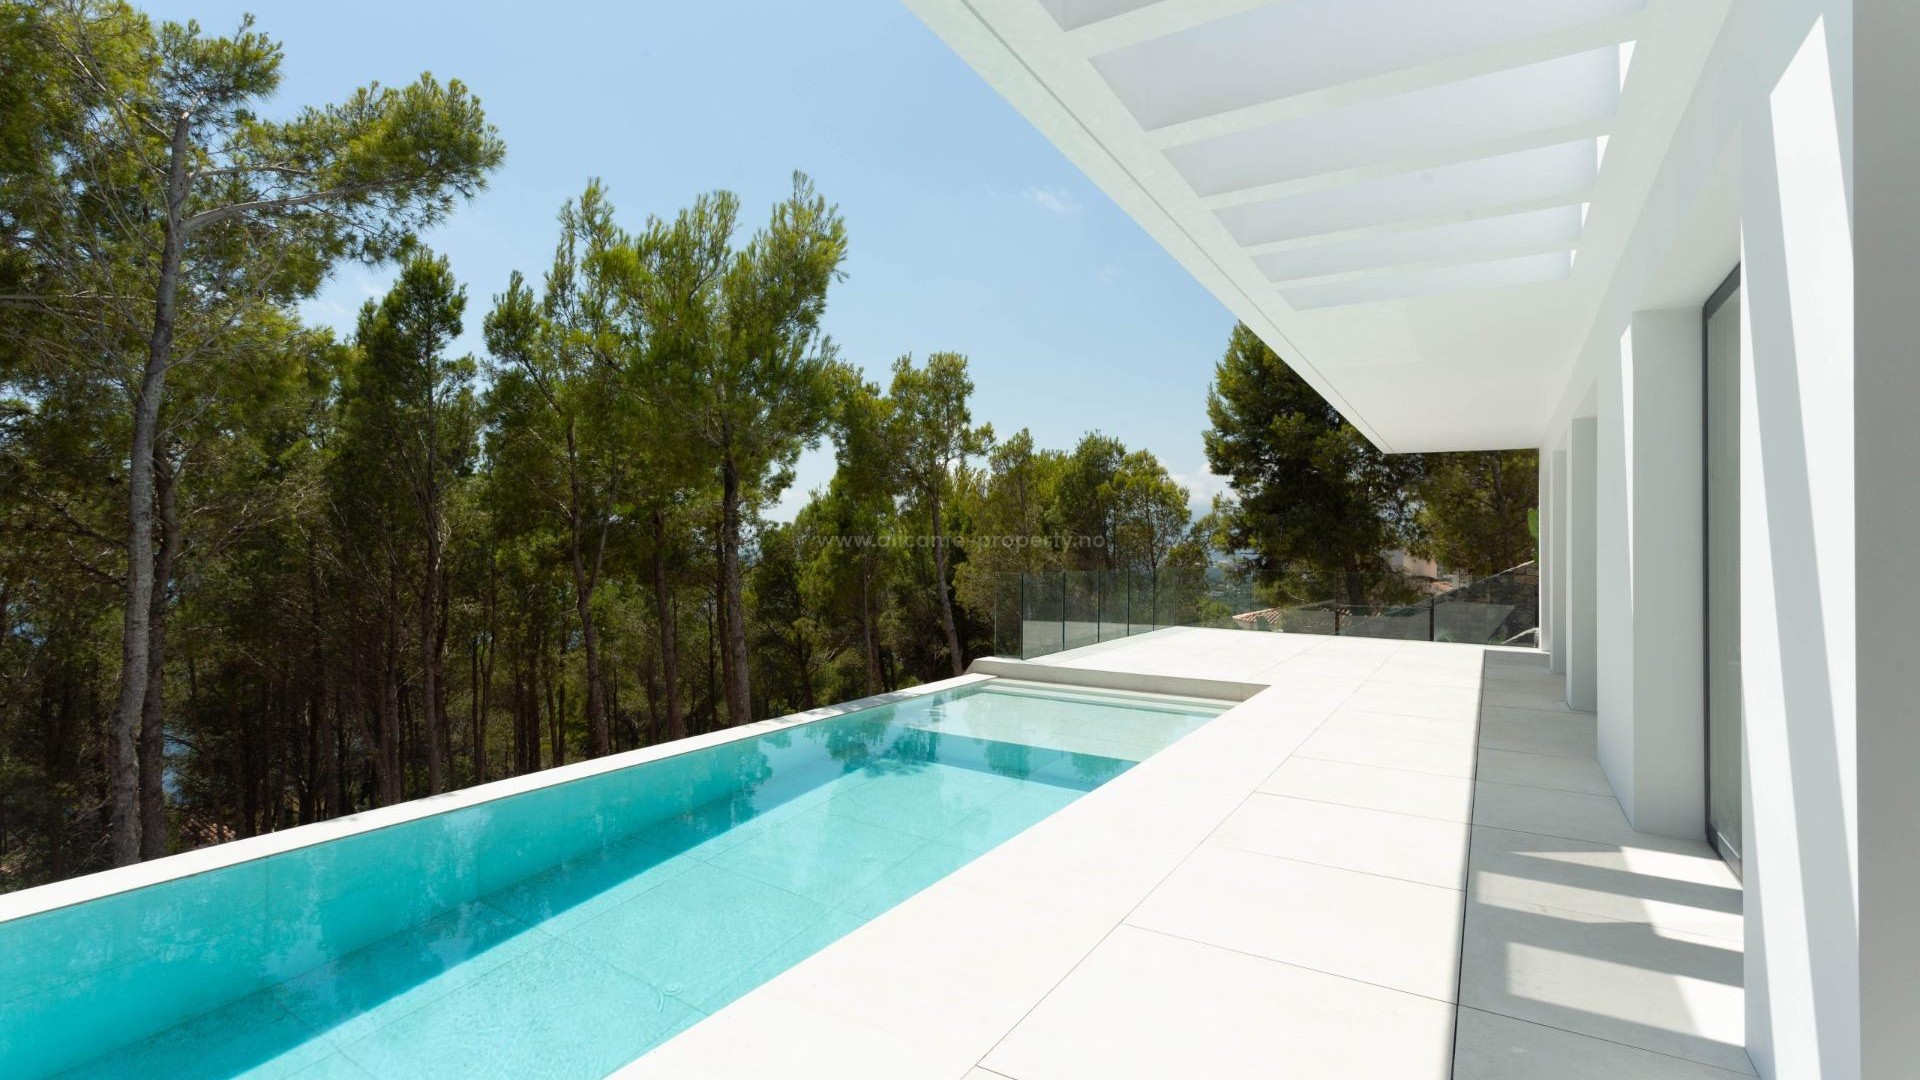 Luxury villa in Altea Hills, 4 bedrooms, 4 bathrooms, infinity pool, room for gym, sauna or billiards, the best view of the Mediterranean and Altea